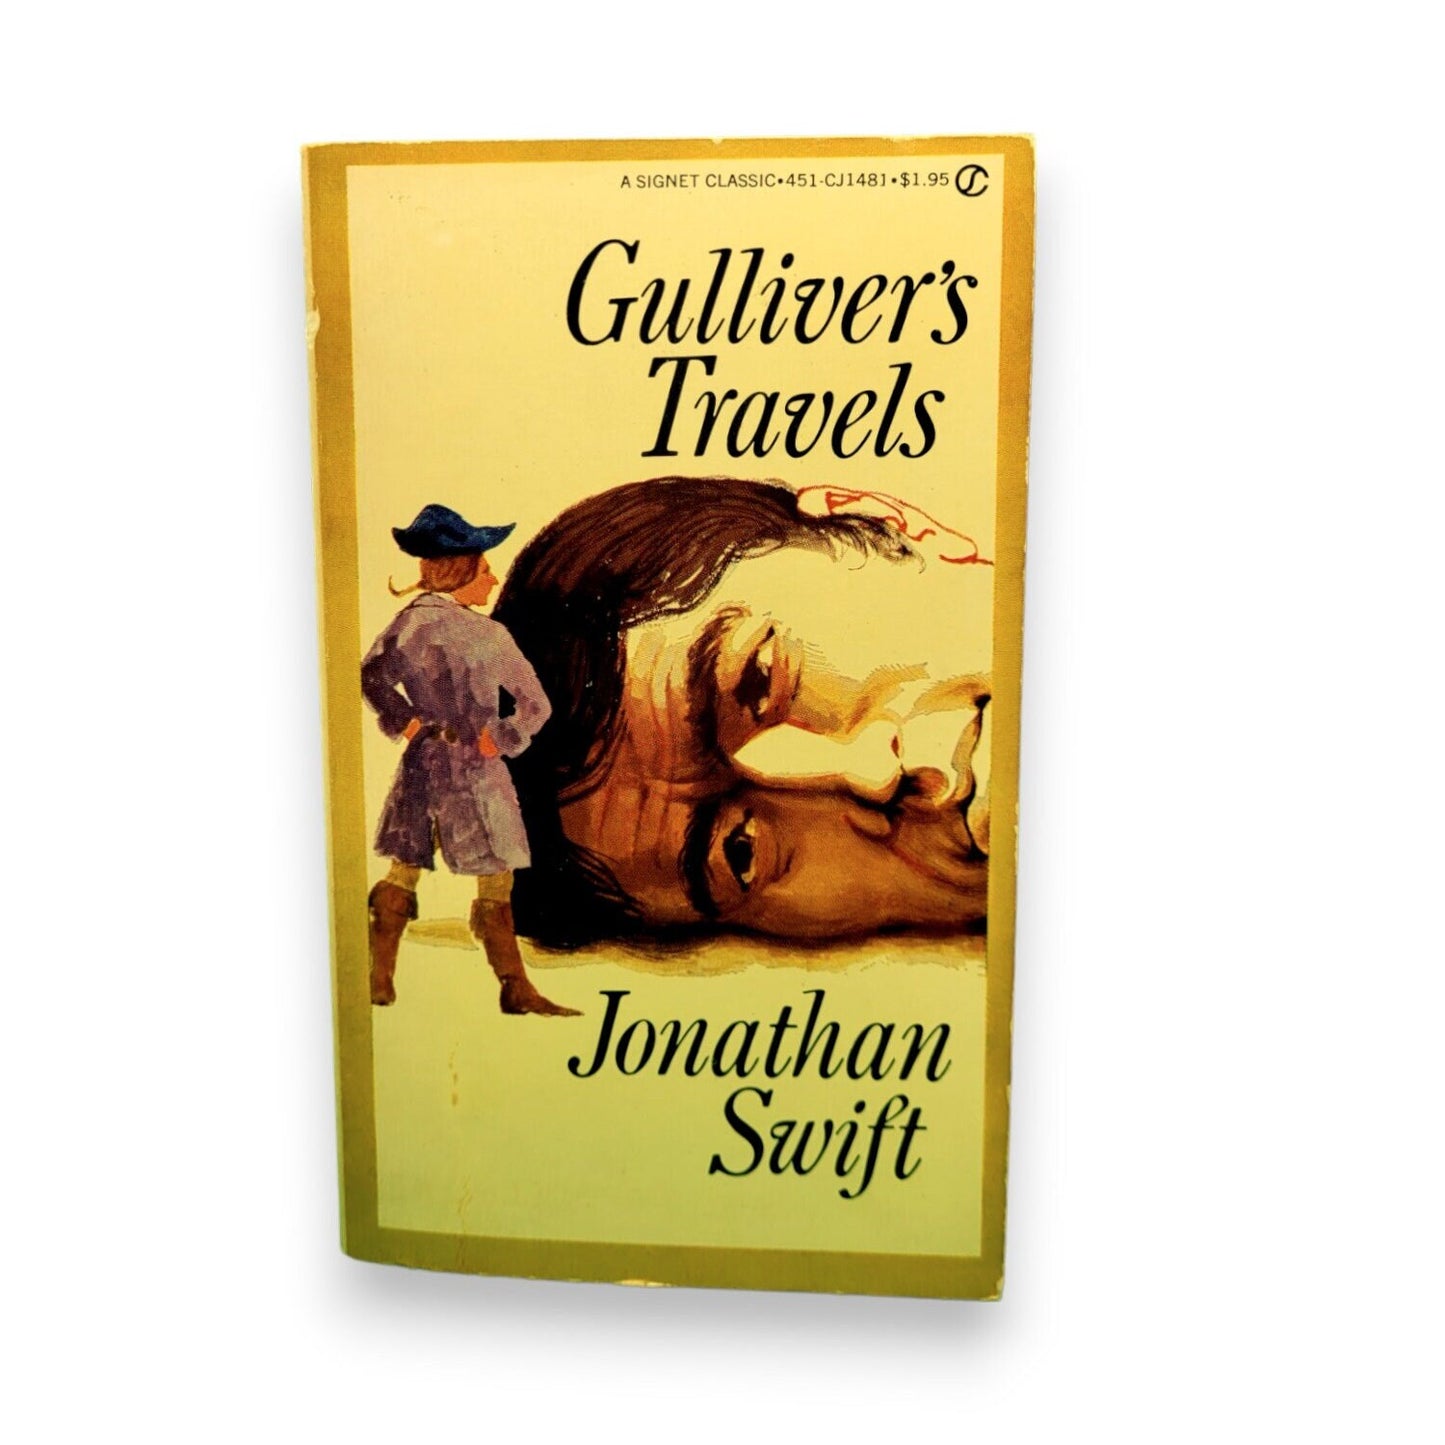 Gulliver's Travels by Jonathon Swift (A Signet Classic) 1960